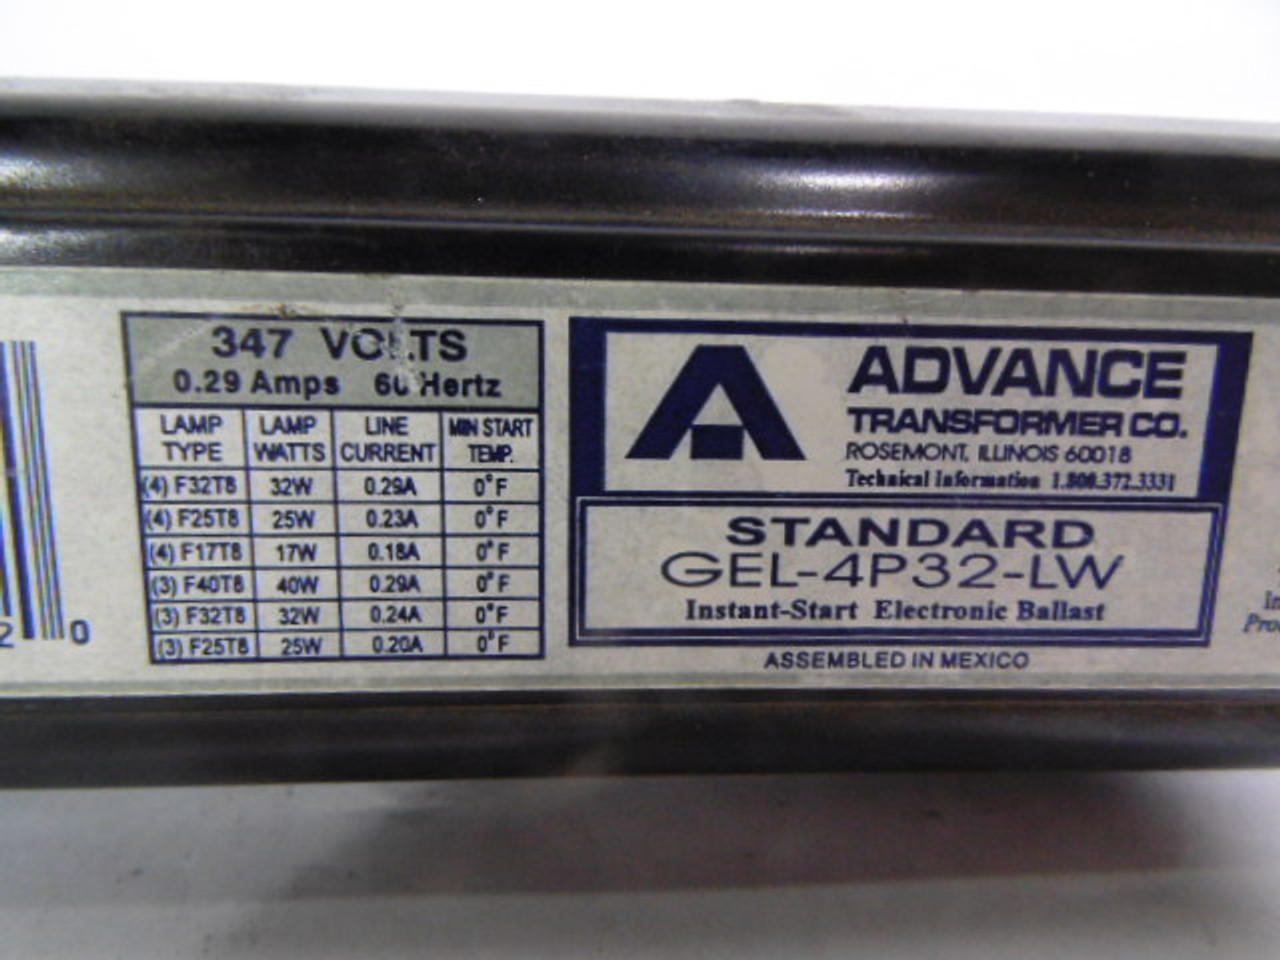 Advance GEL-4P32-LW Instance Start Electronic Ballast 347V 0.29A 60 Hz USED